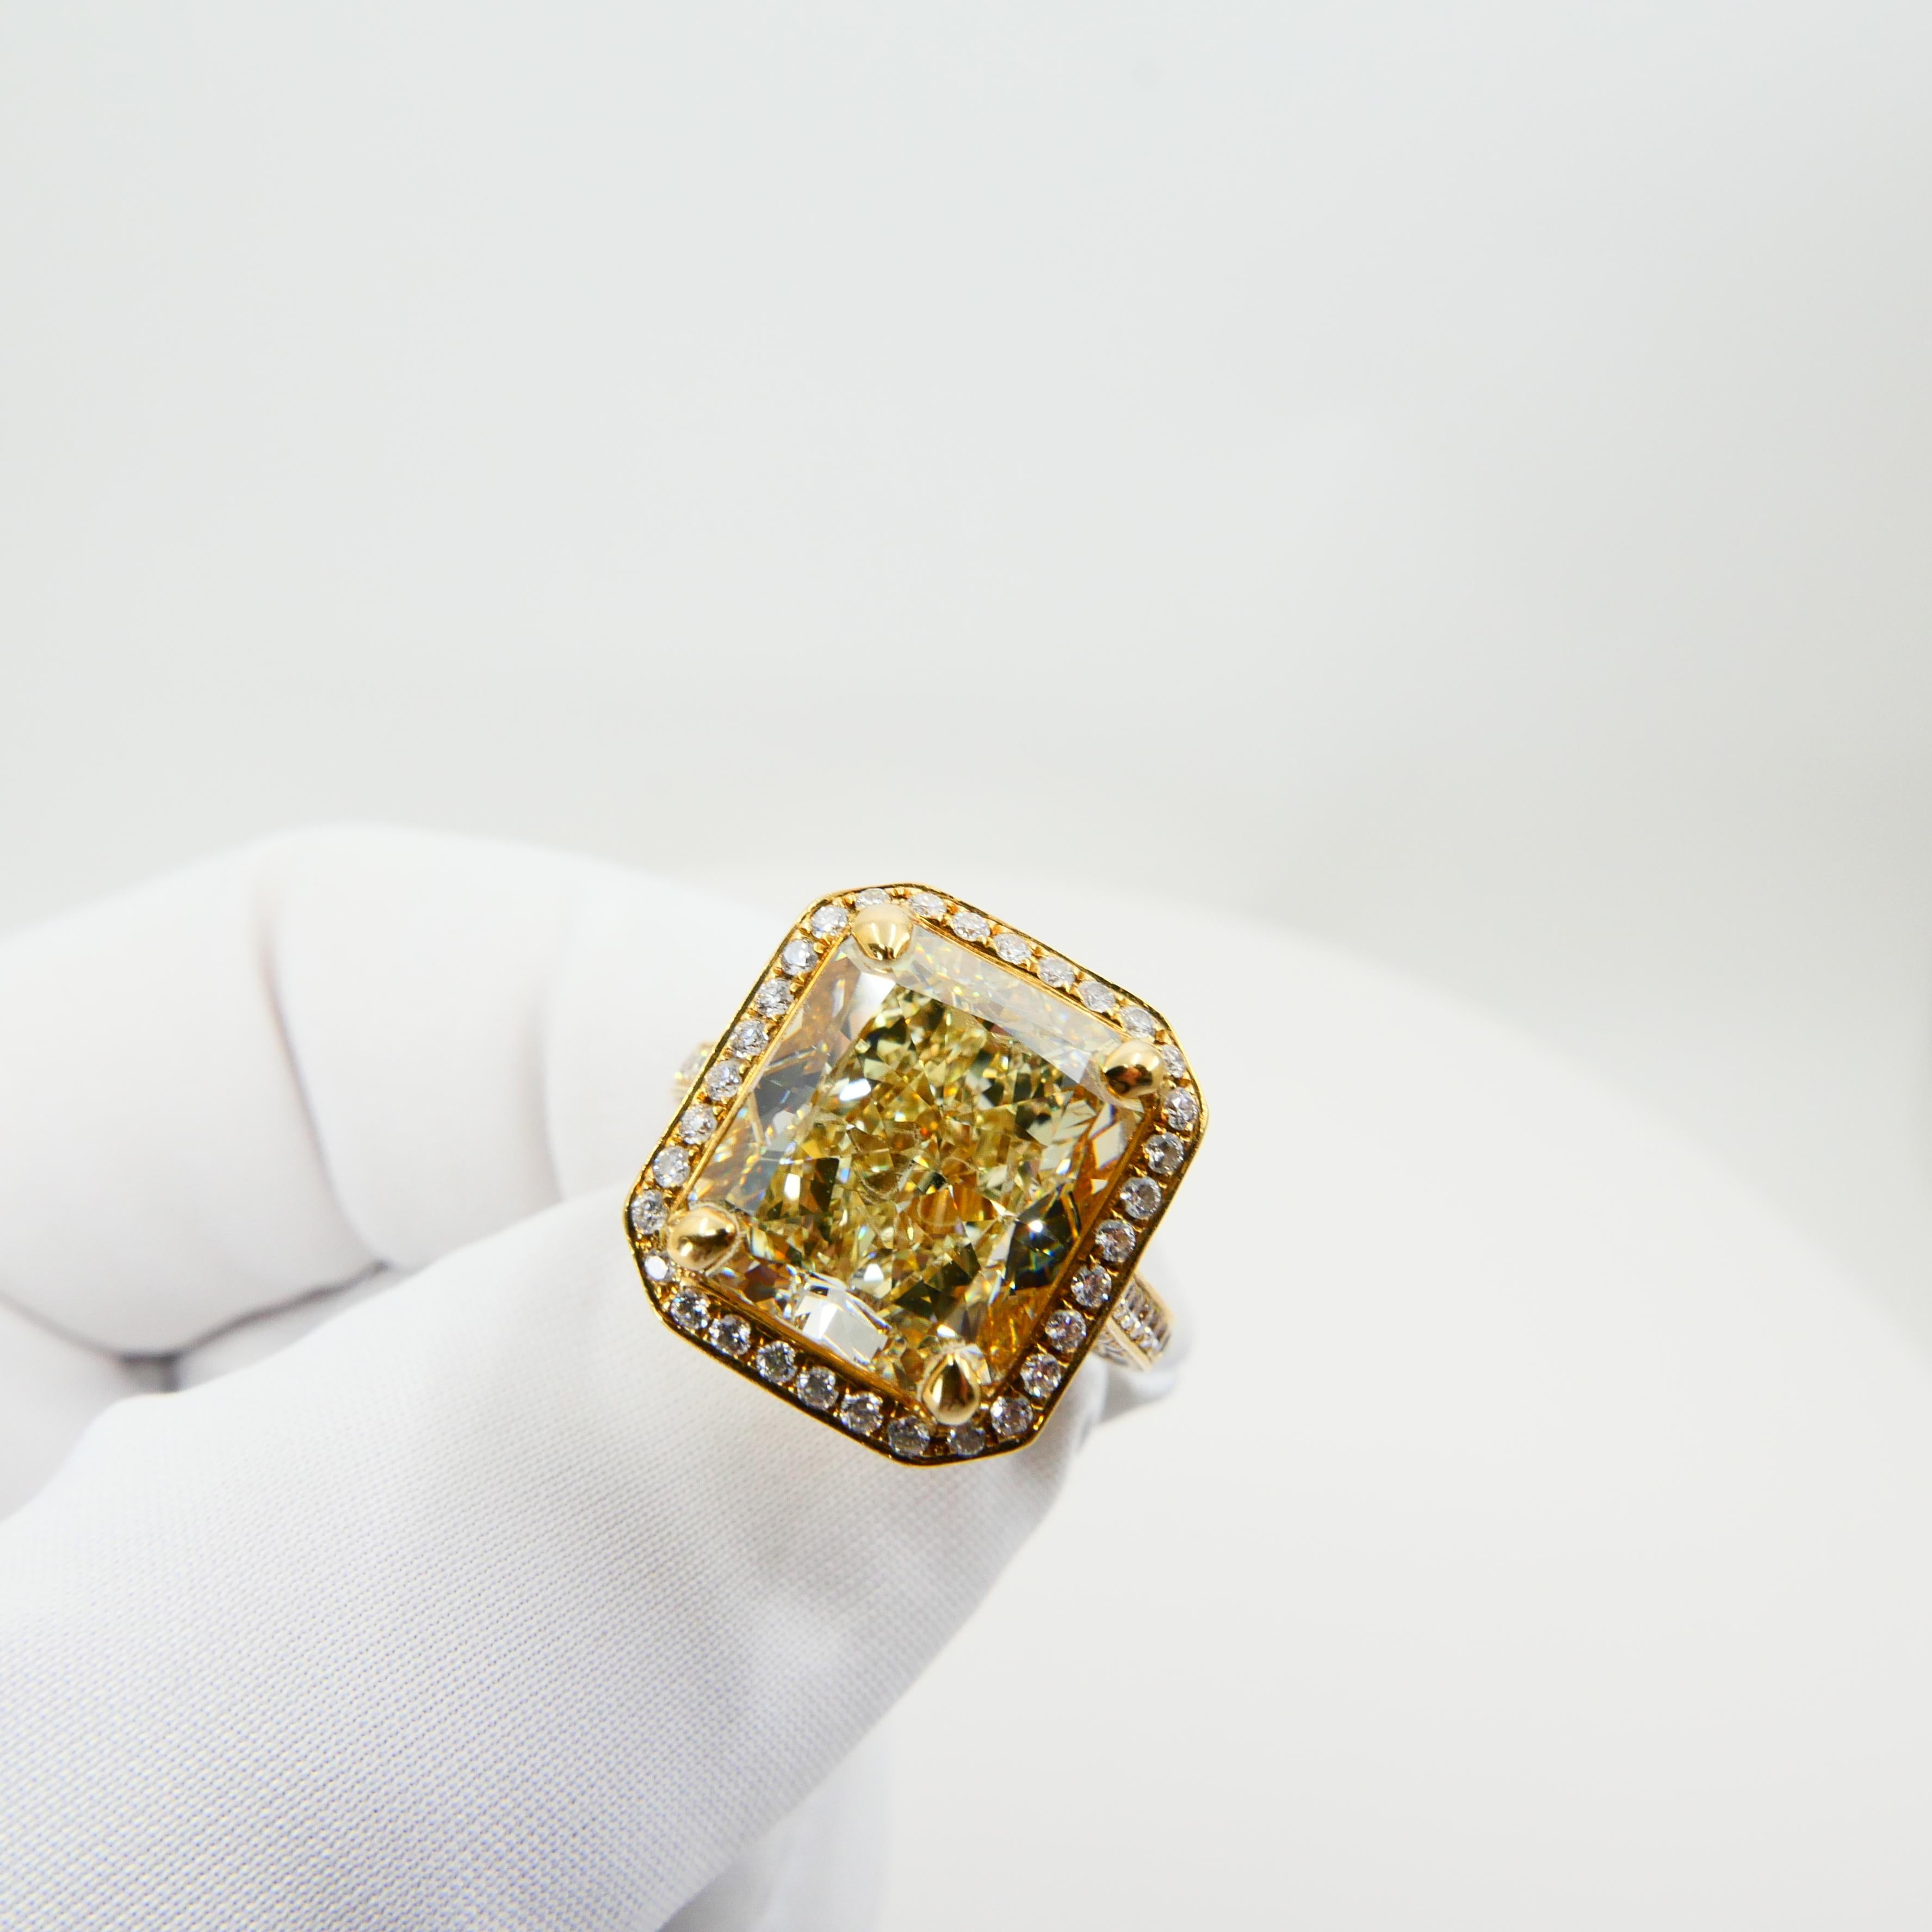 GIA Certified 9 Carat Yellow Diamond Engagement Ring, Oversized & Eye Clean 1